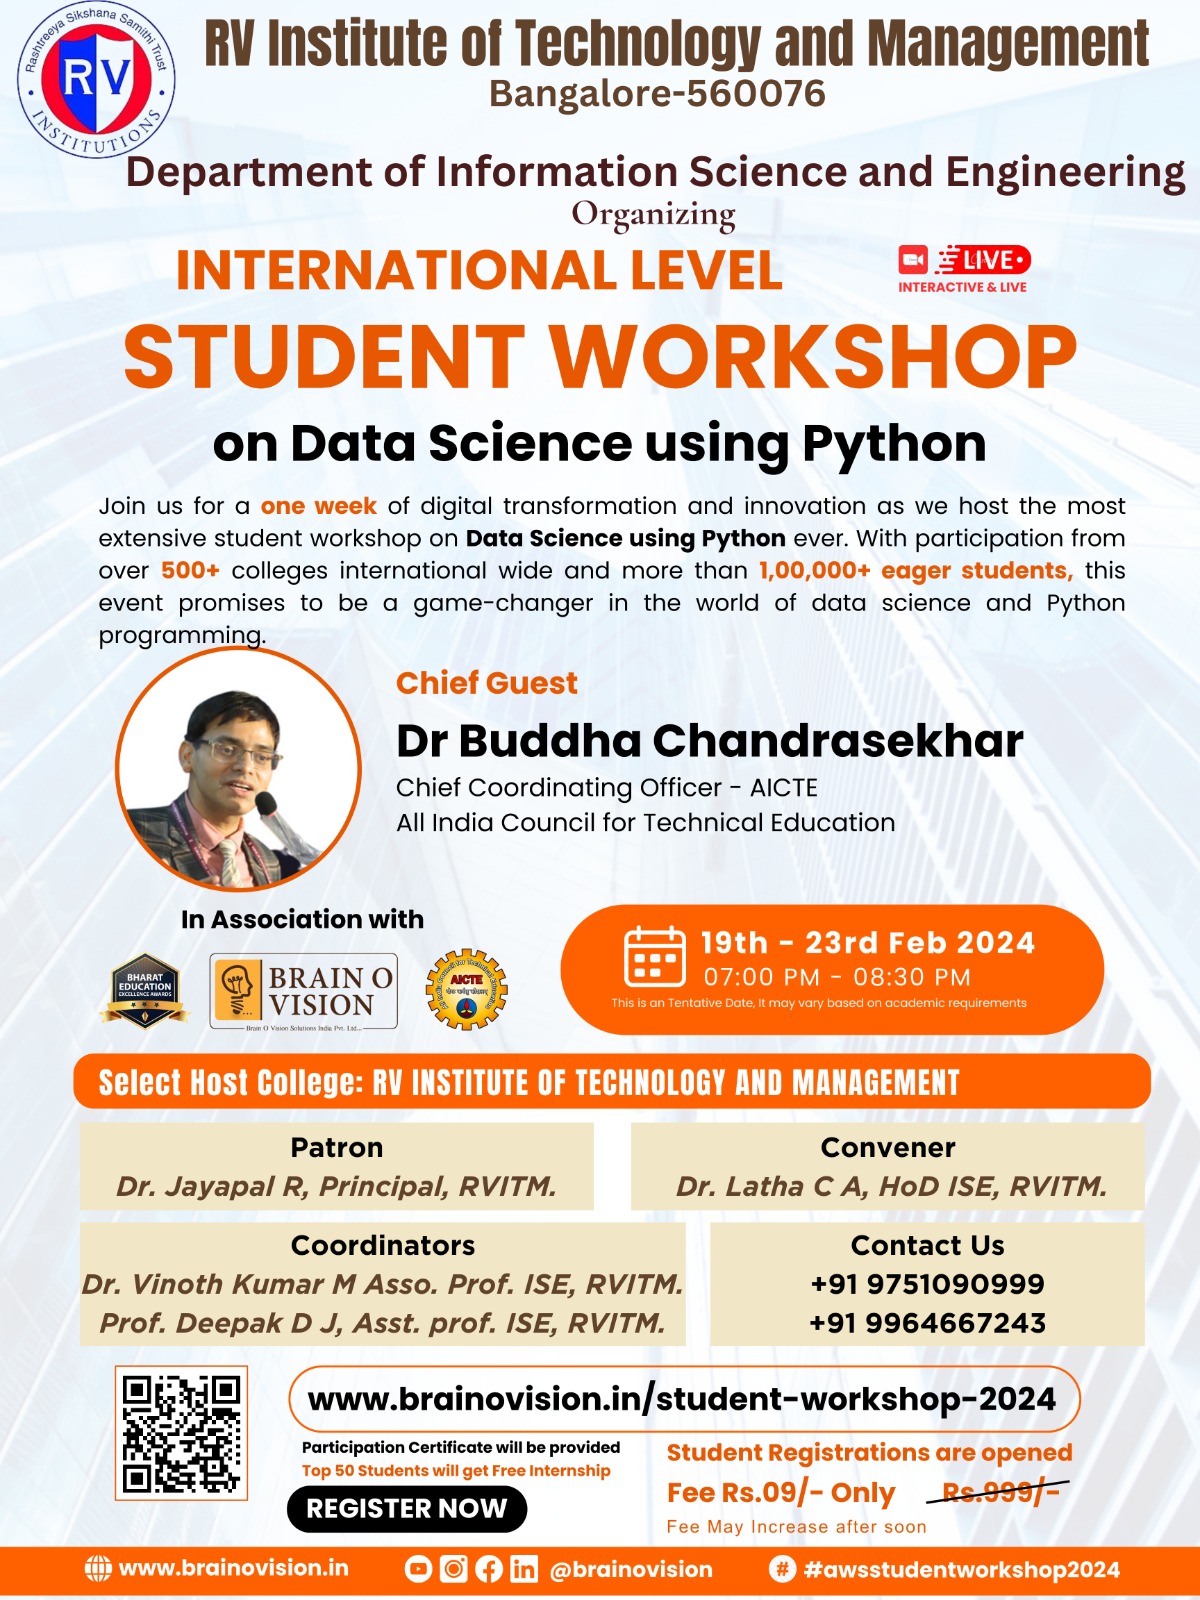 International Level Student Workshop on Datascience using Python 2023